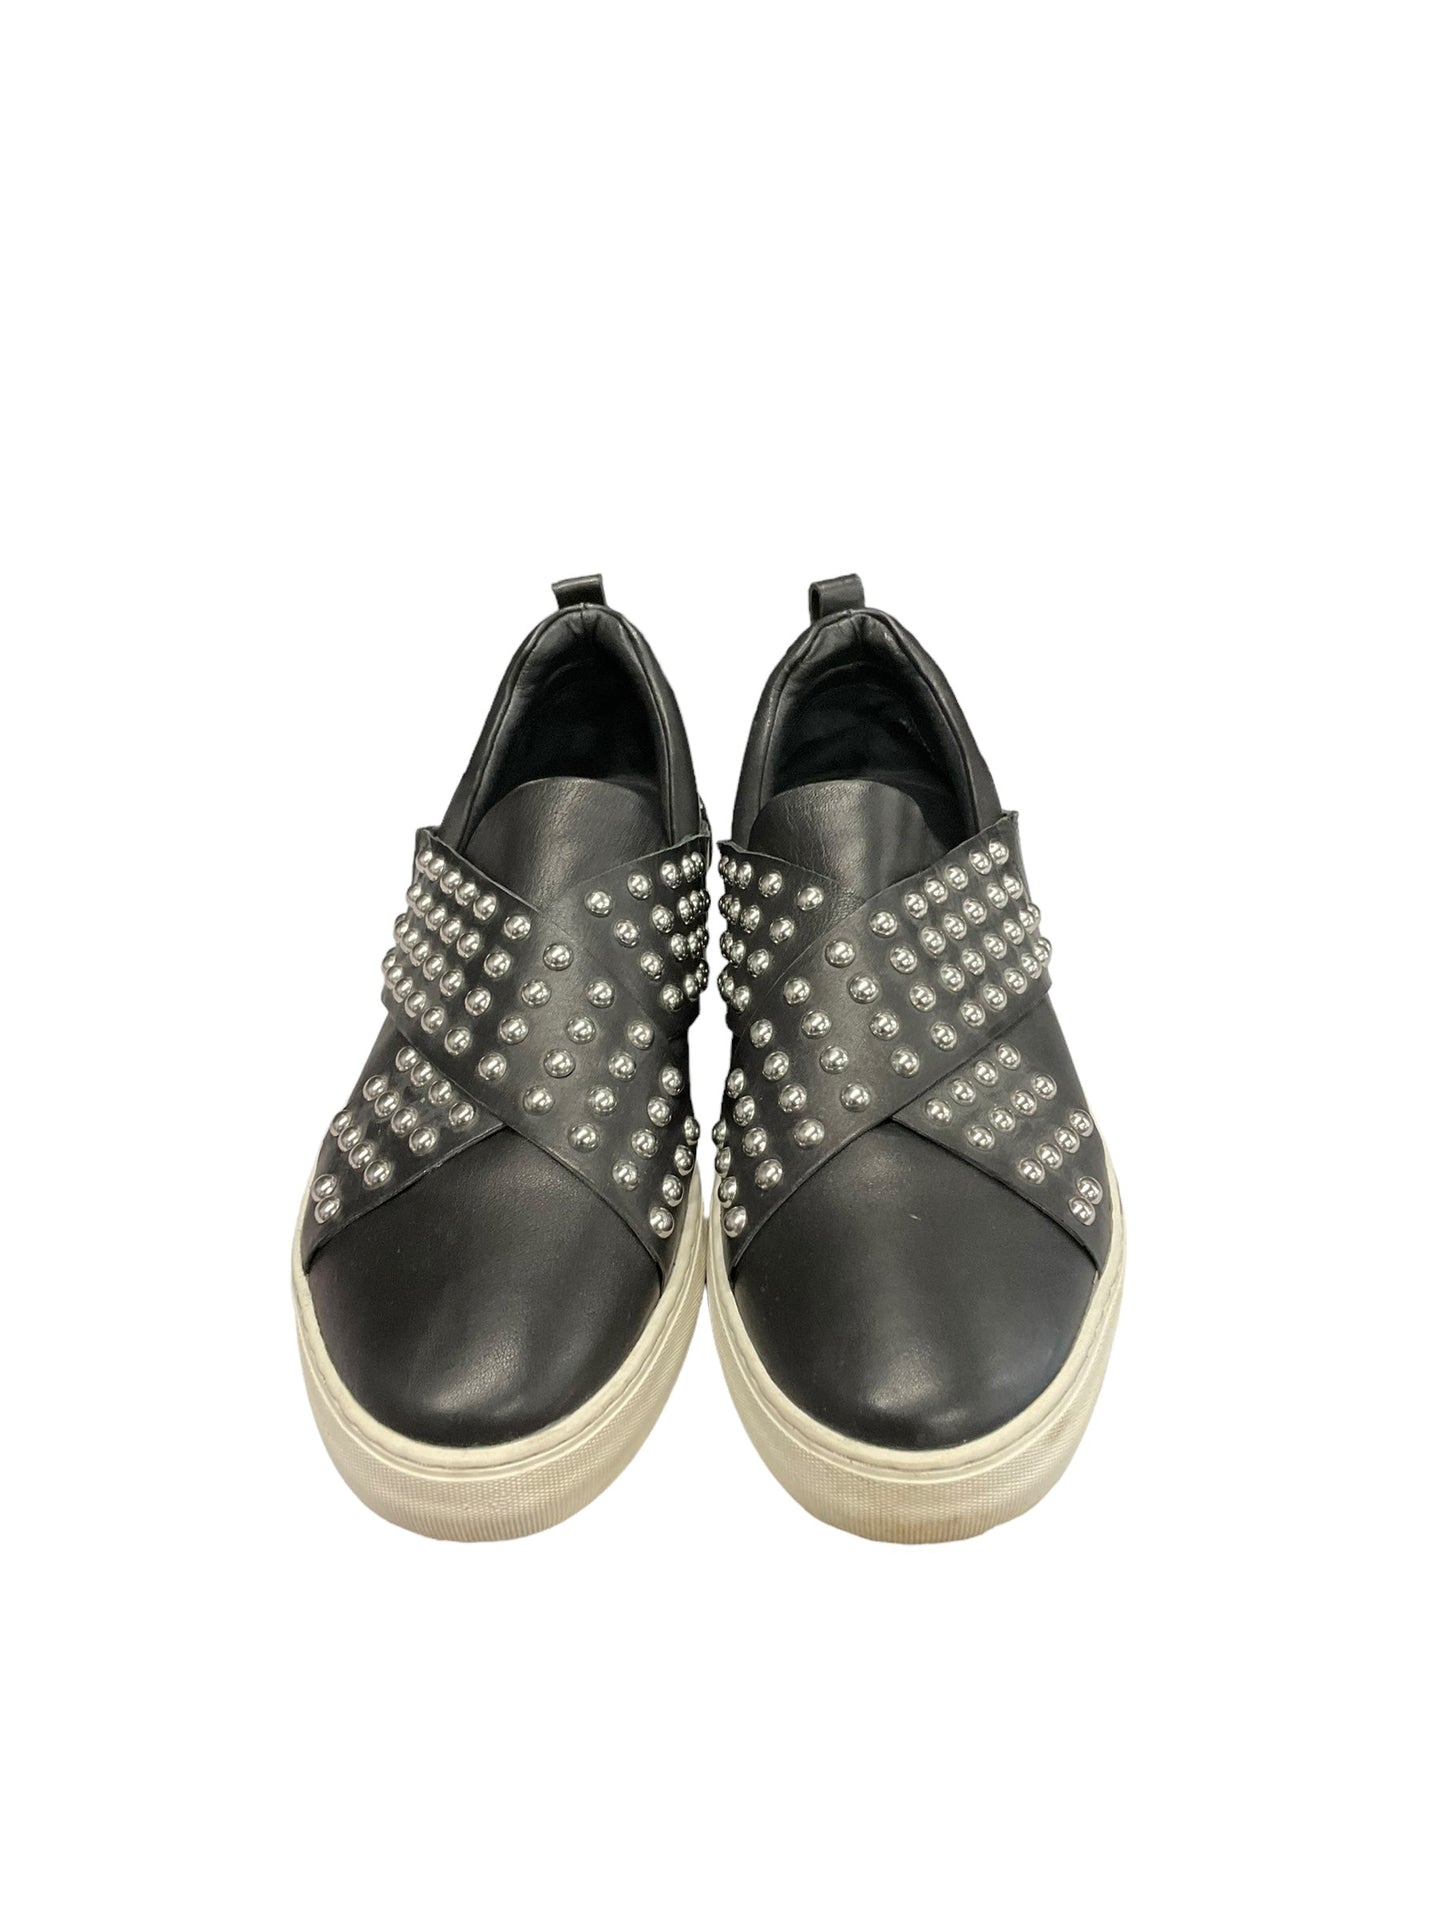 Black Shoes Flats J Slides, Size 10